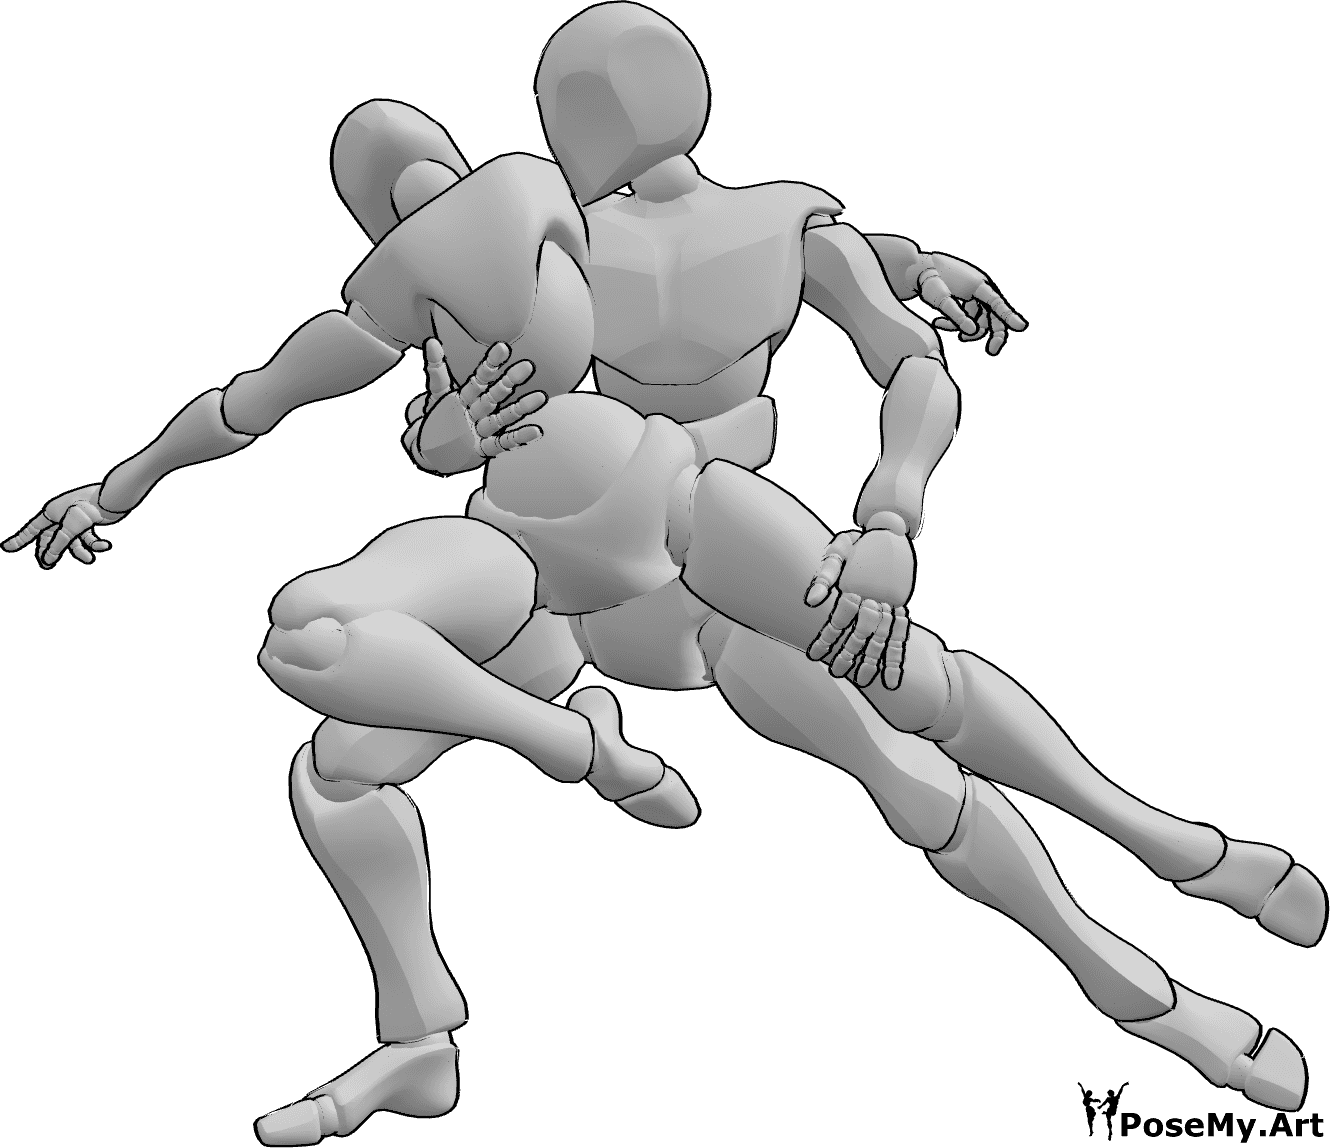 Pose Reference - Dynamic tango dance pose - Male tango dancer is holding the female dancer, dynamic tango pose